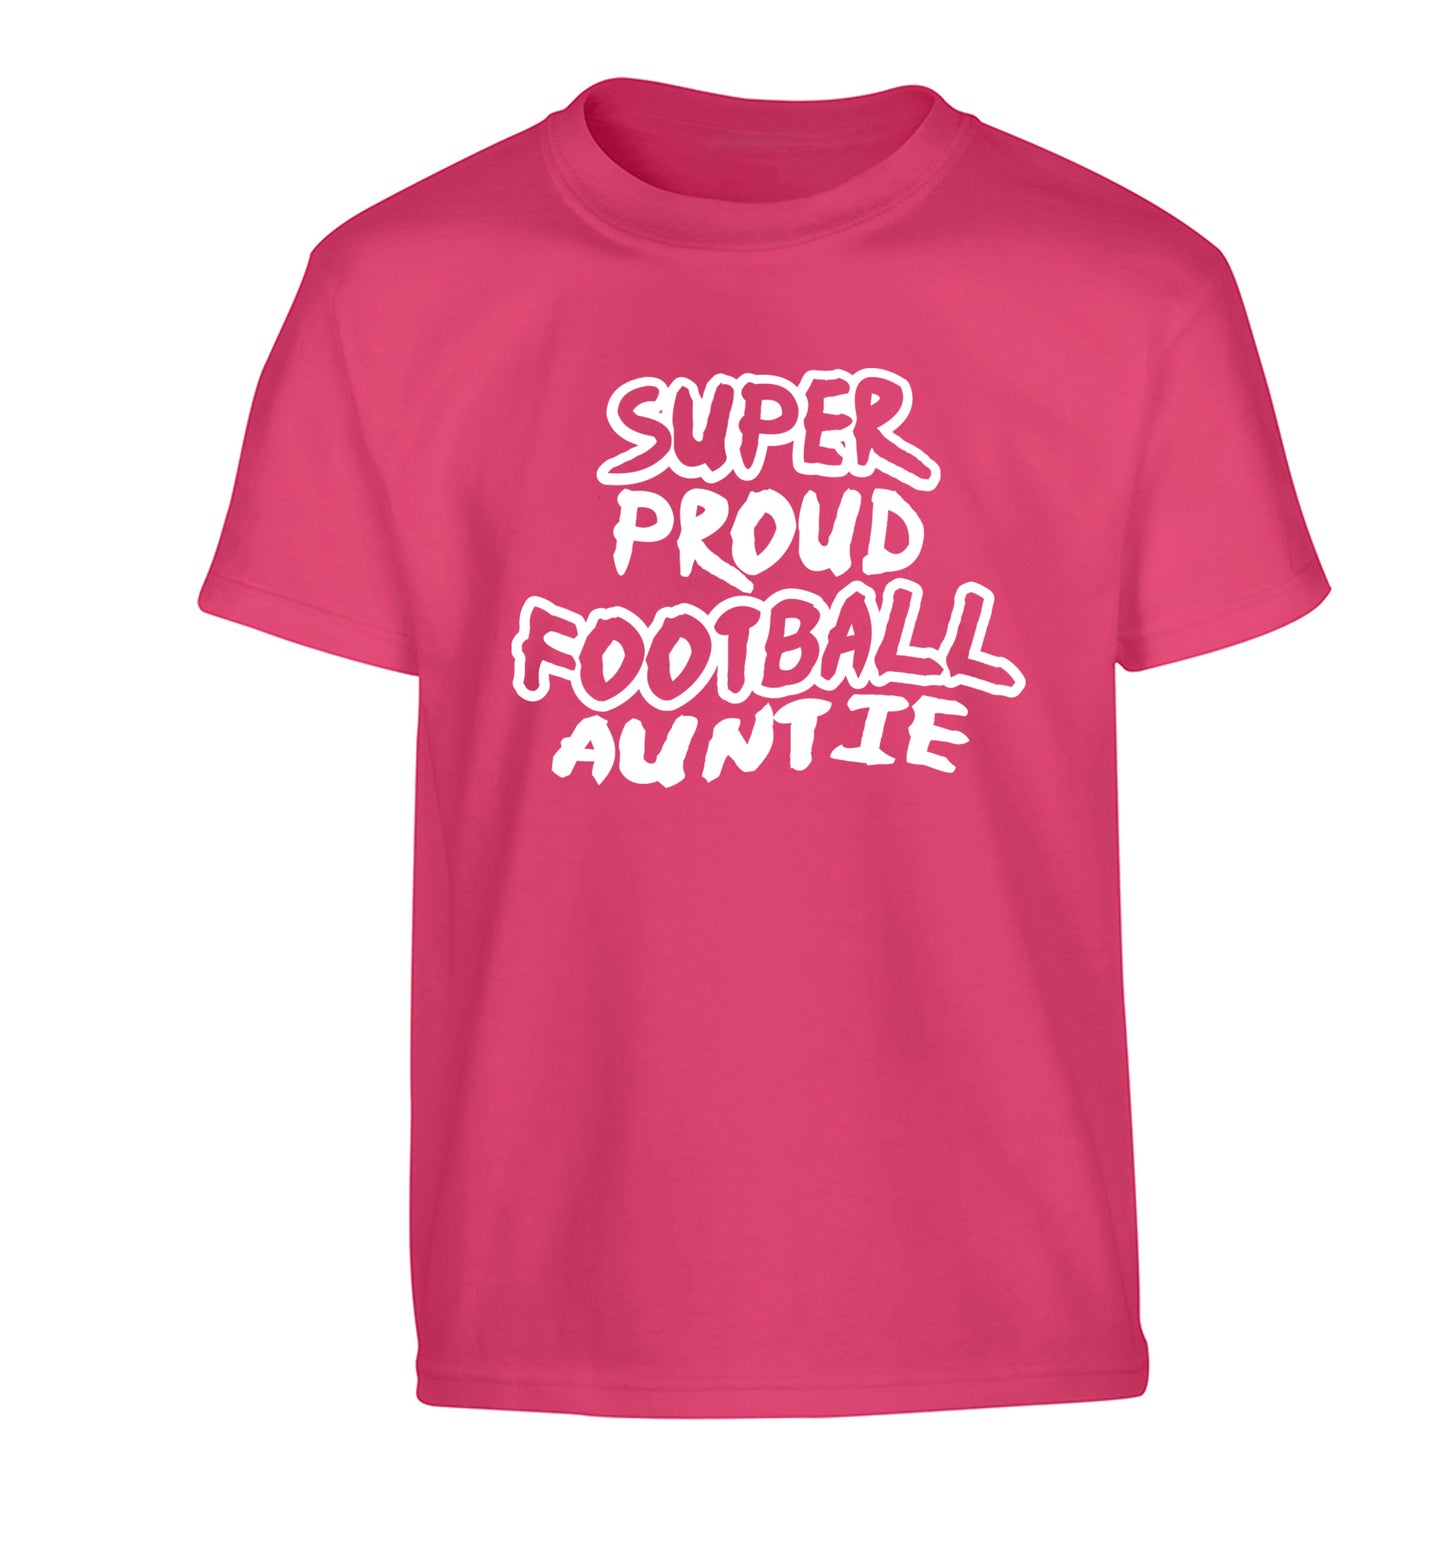 Super proud football auntie Children's pink Tshirt 12-14 Years